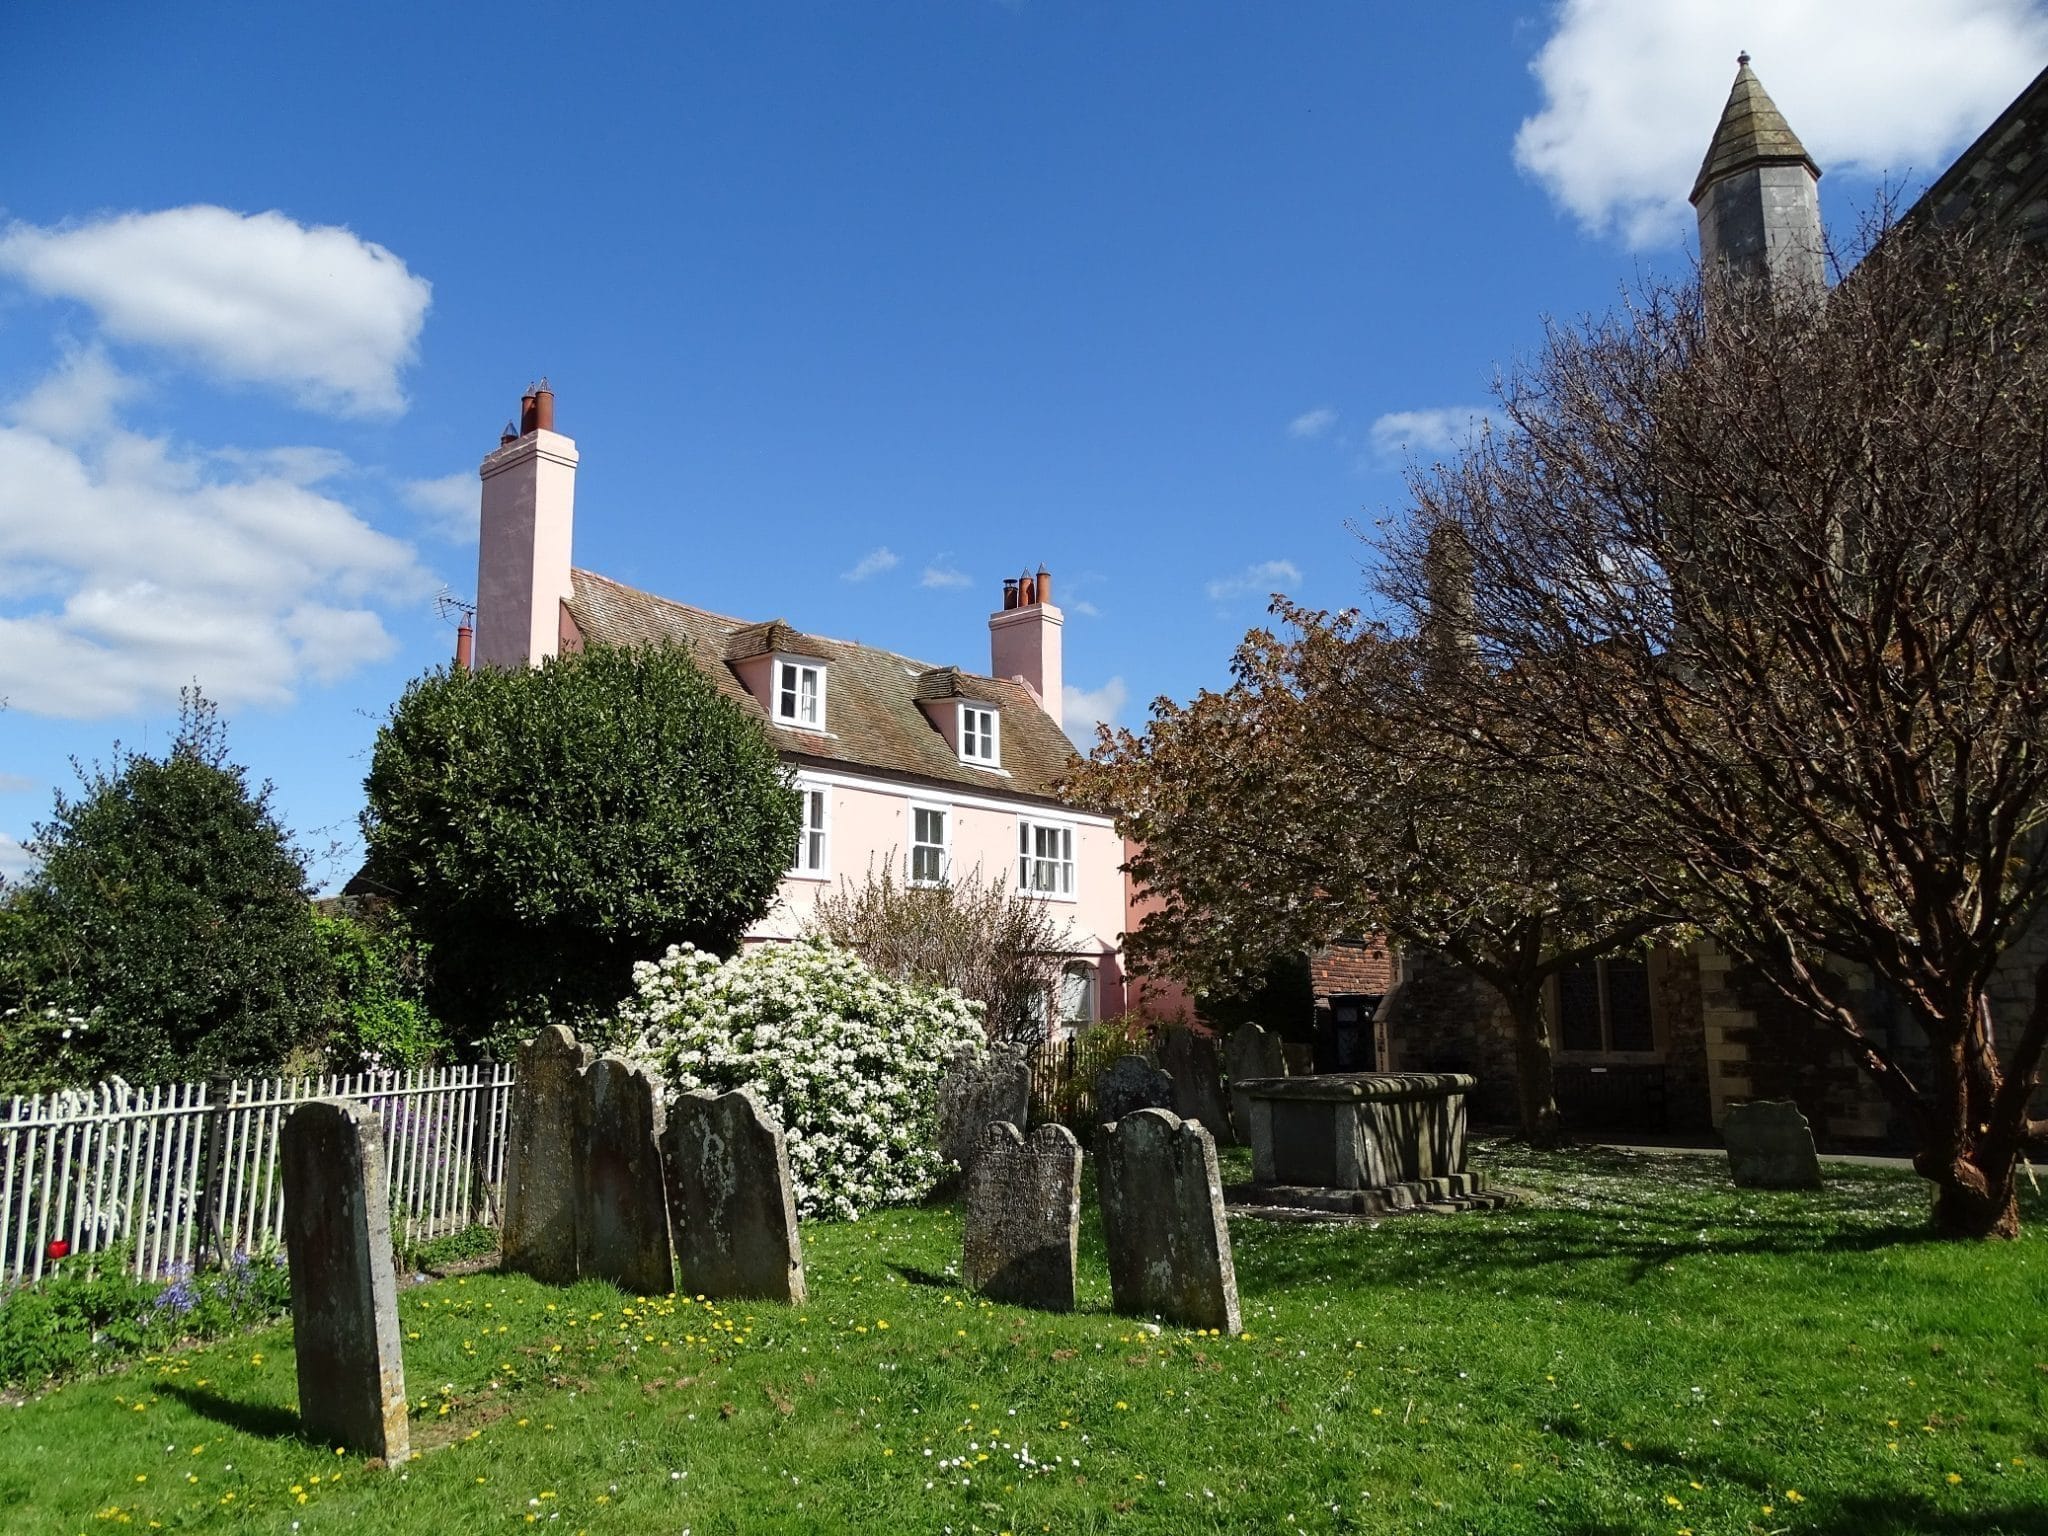 Visit pretty Church Square in Rye